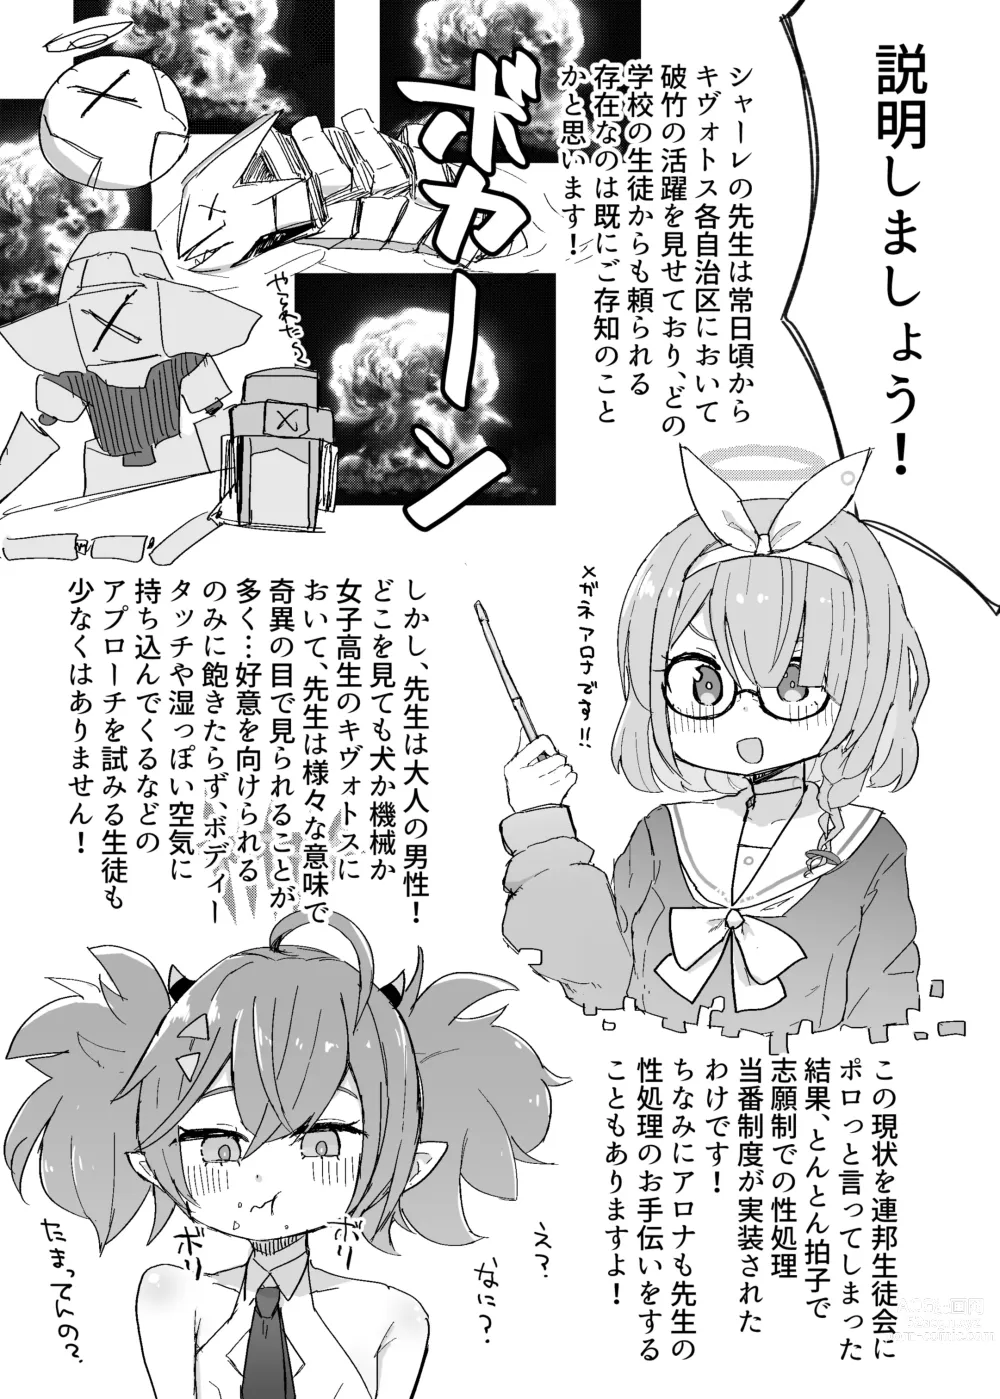 Page 2 of doujinshi Schale Seisyori Toubann Nisshi